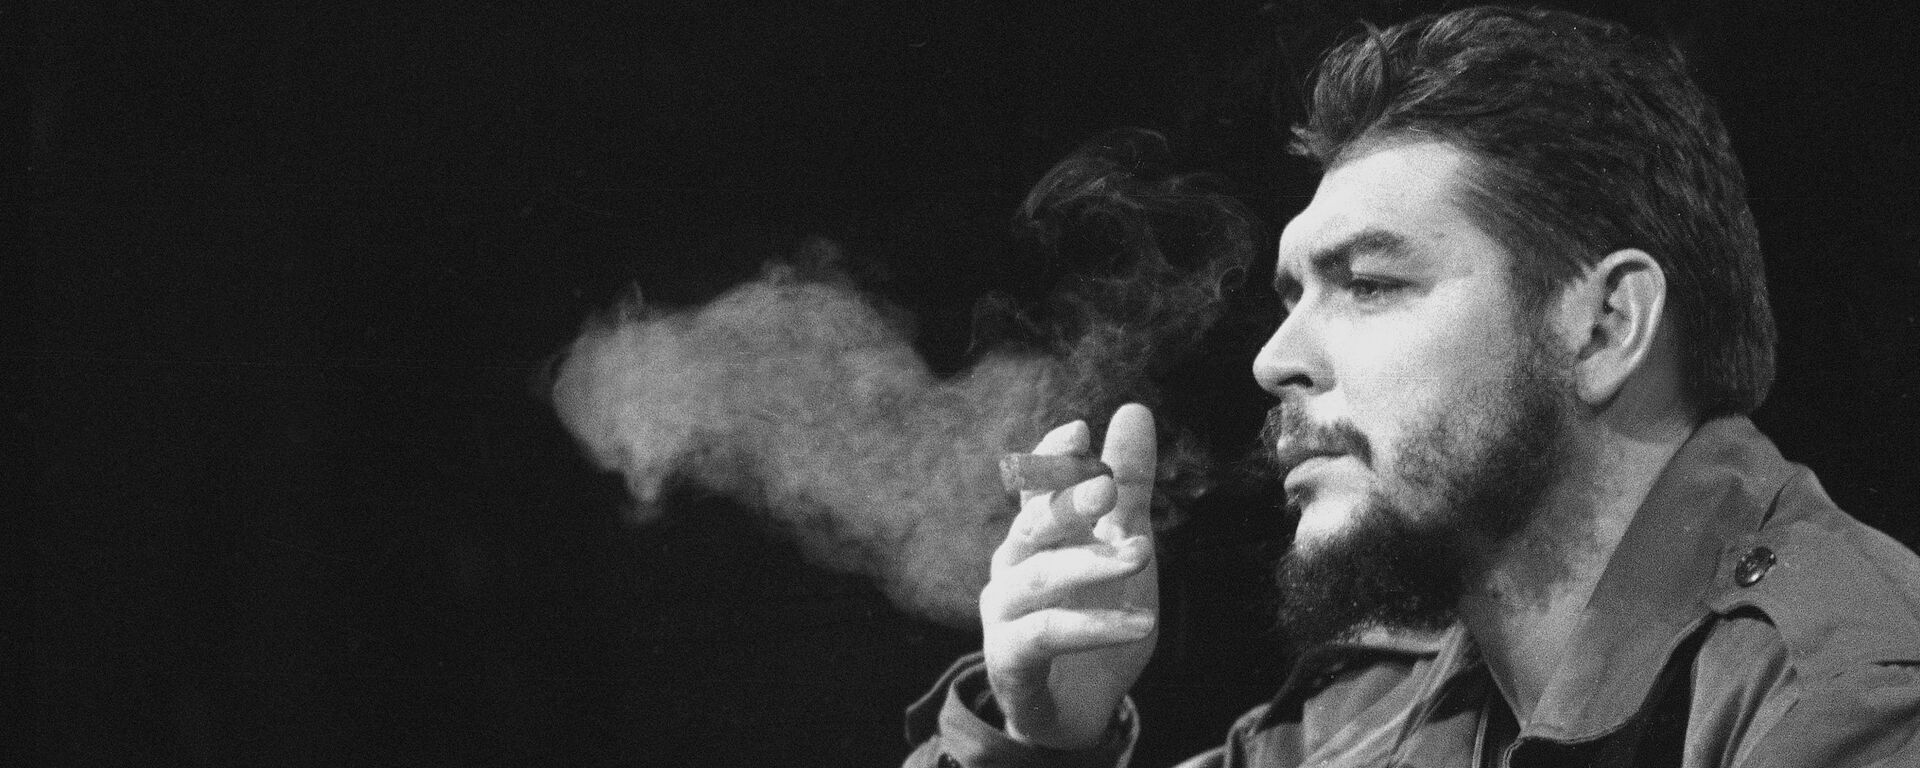 Latin American revolutionary Ernesto Che Guevara is seen in 1964. - Sputnik Mundo, 1920, 08.10.2020